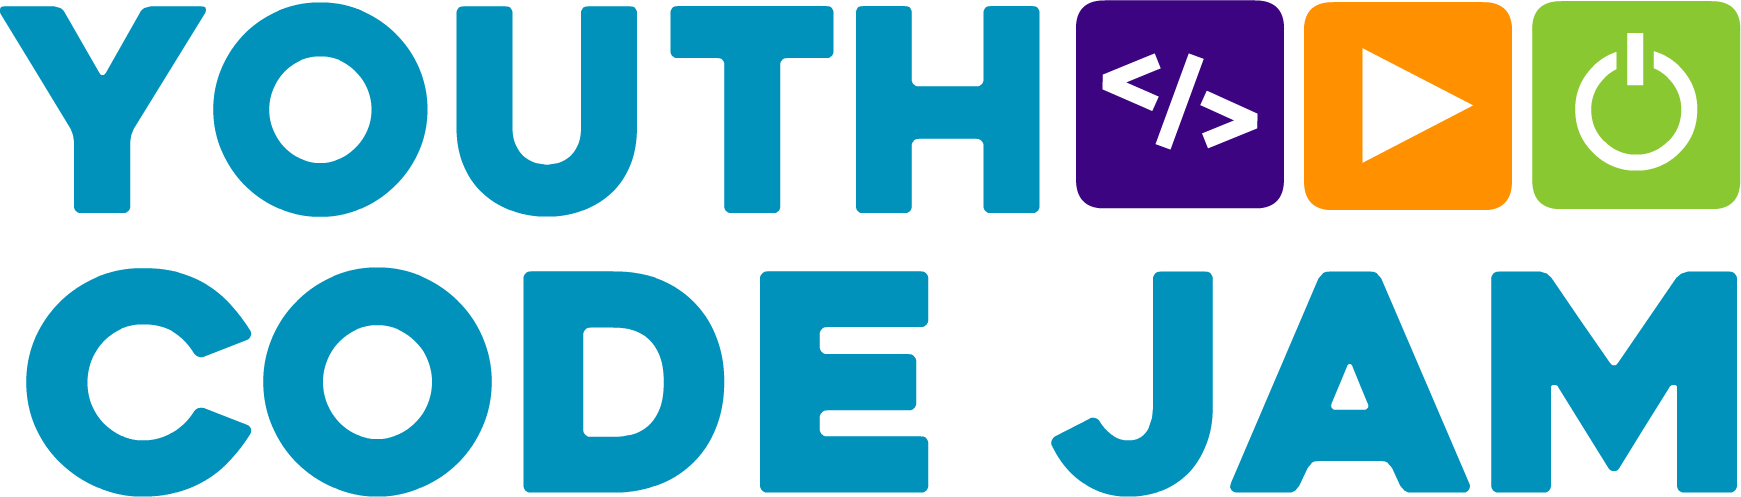 Youth code jam logo